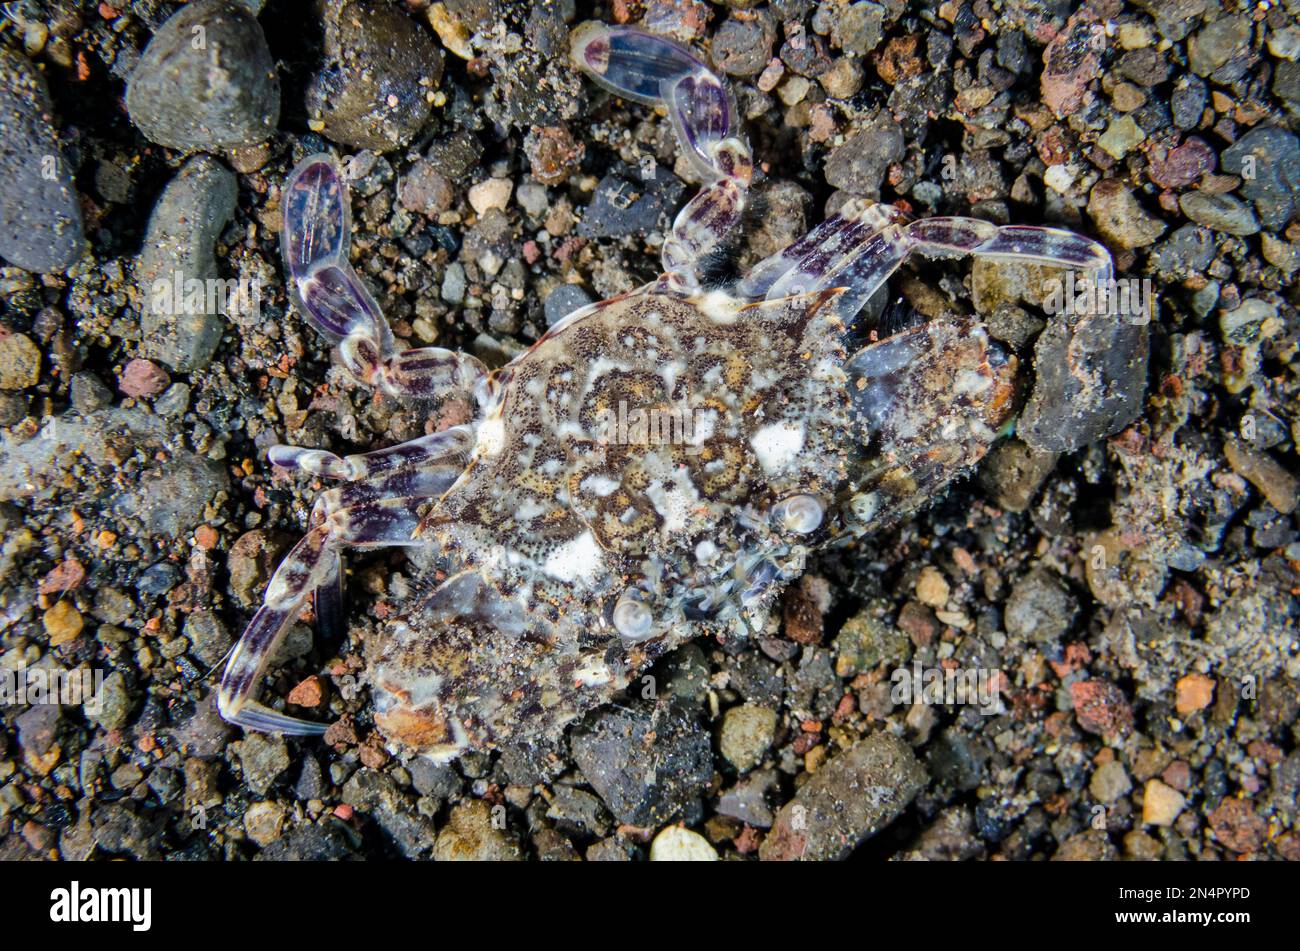 Swimming Crab, Portunidae Family, Uyah Hotel dive site, Amed, Karangasem Regency, Bali, Indonesia, Indian Ocean Stock Photo